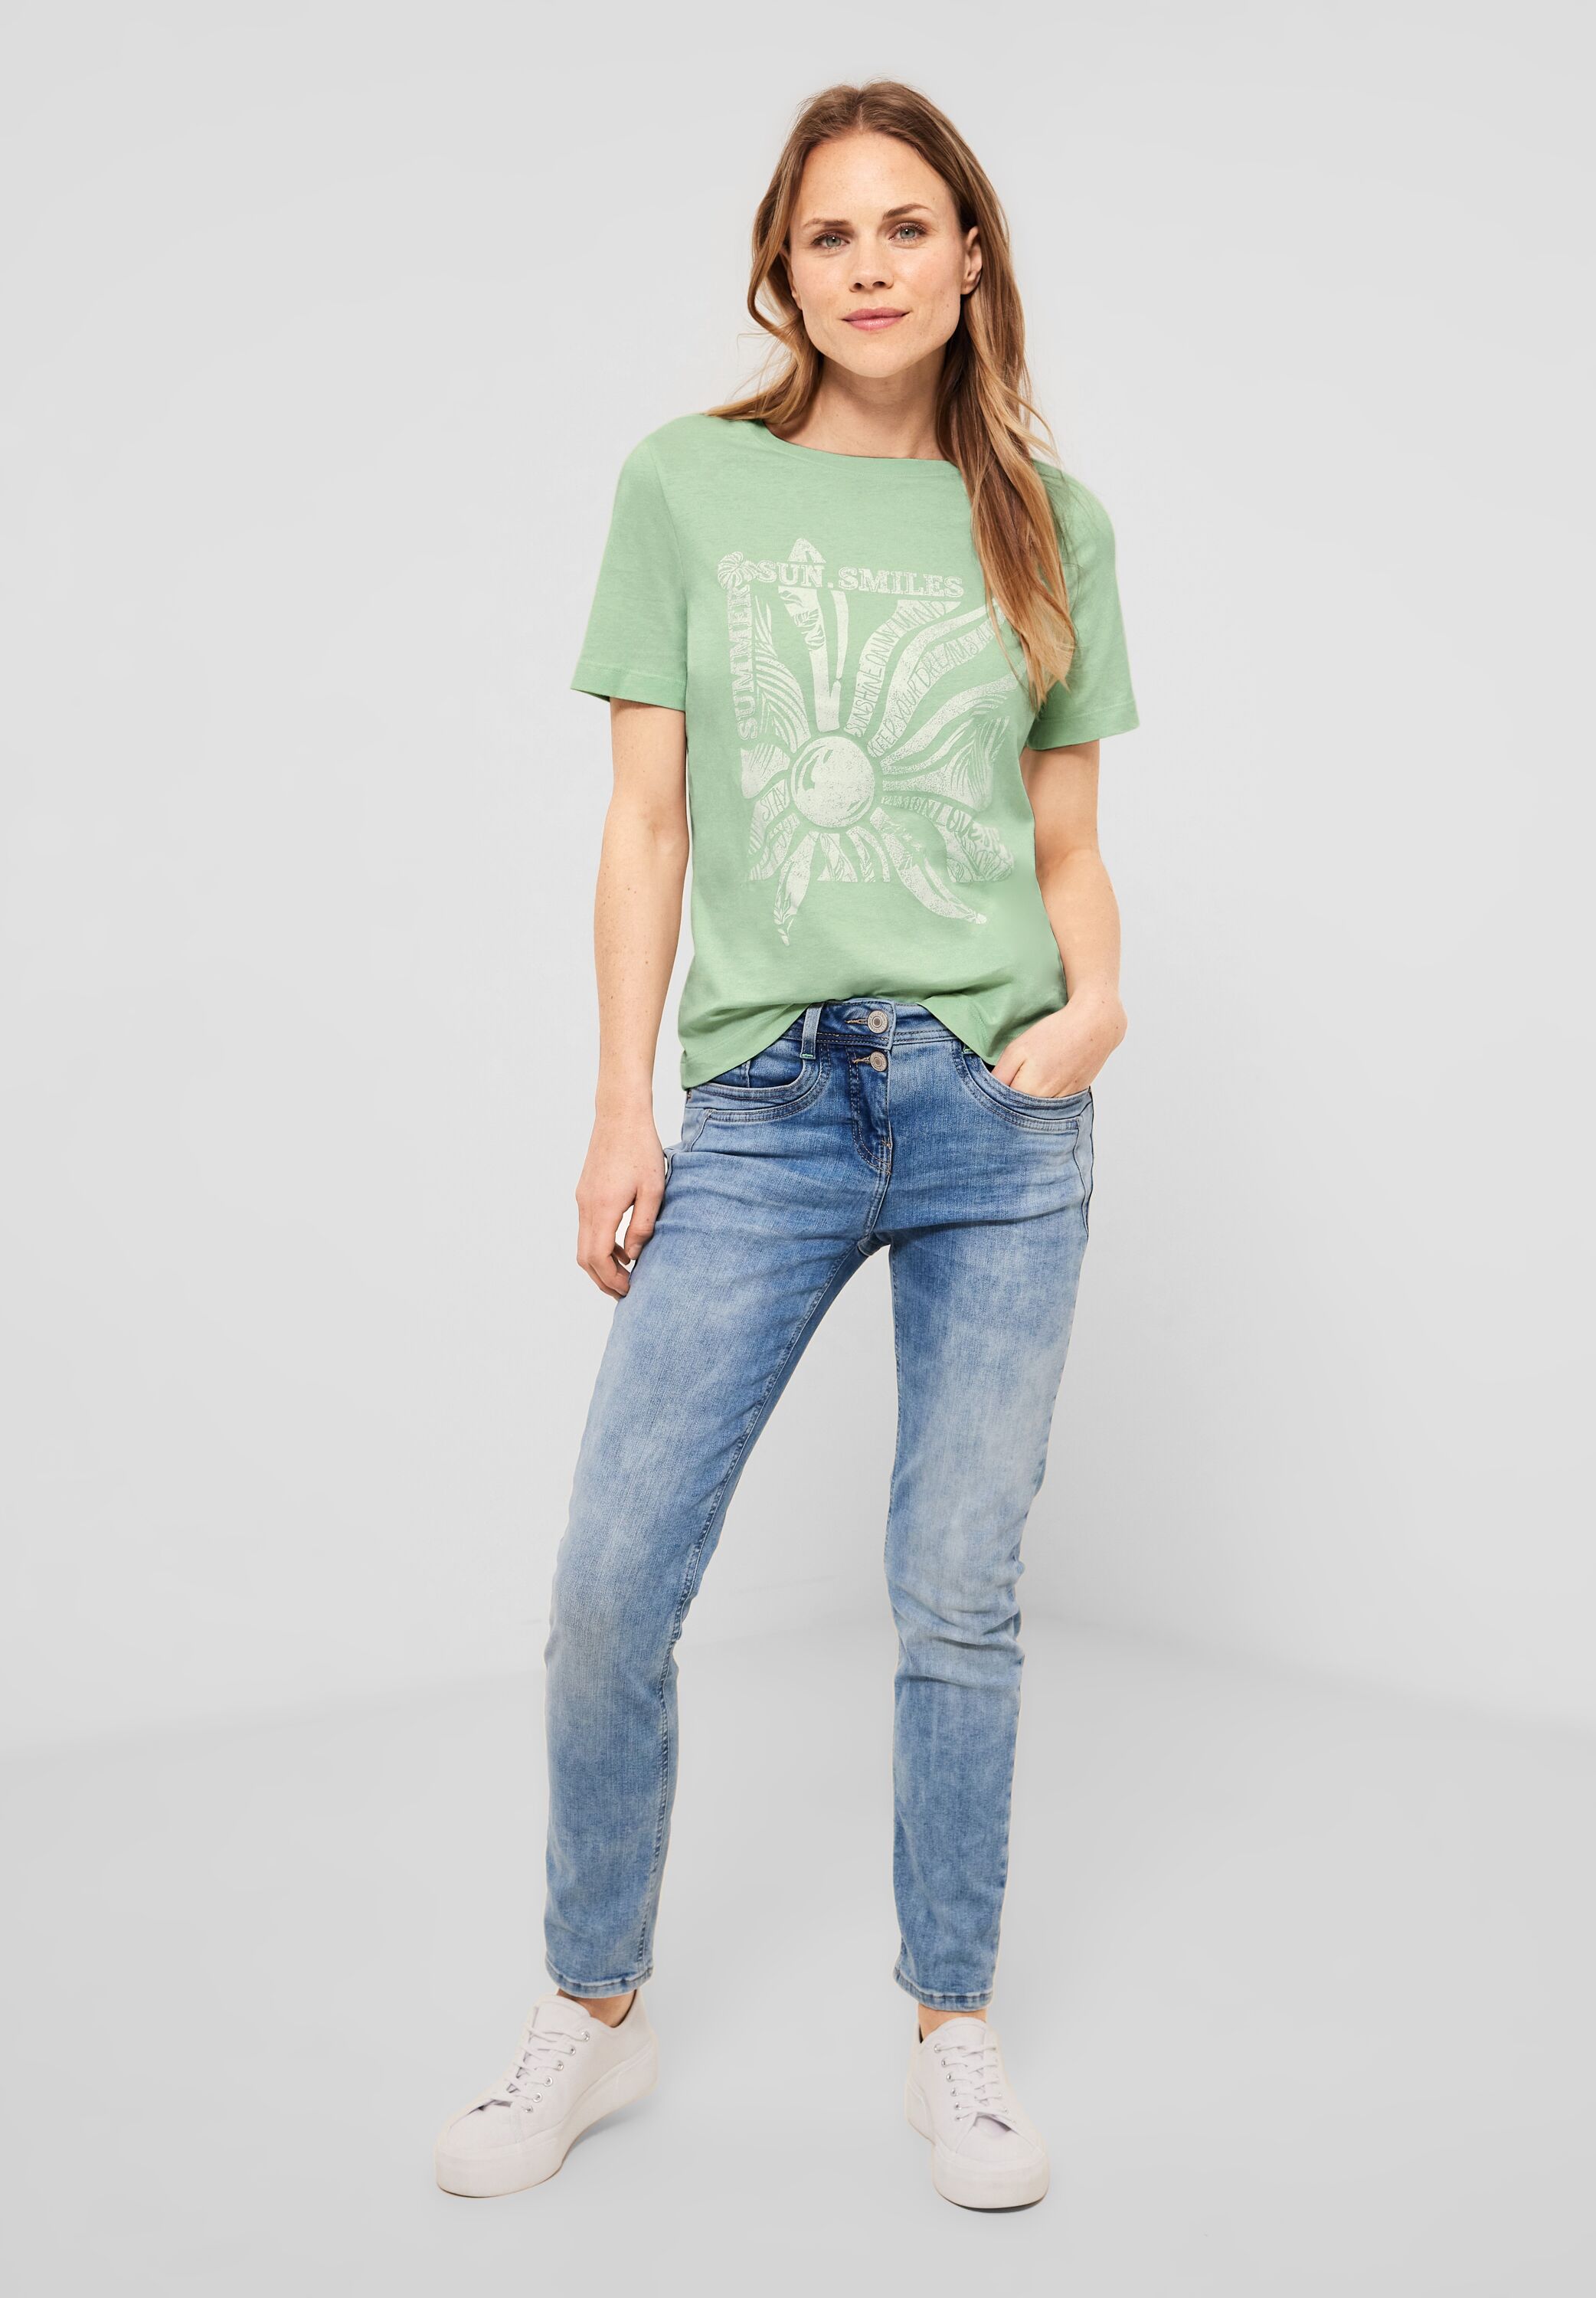 CECIL T-Shirt in Fresh Salvia Green im SALE reduziert B320051-24851 -  CONCEPT Mode